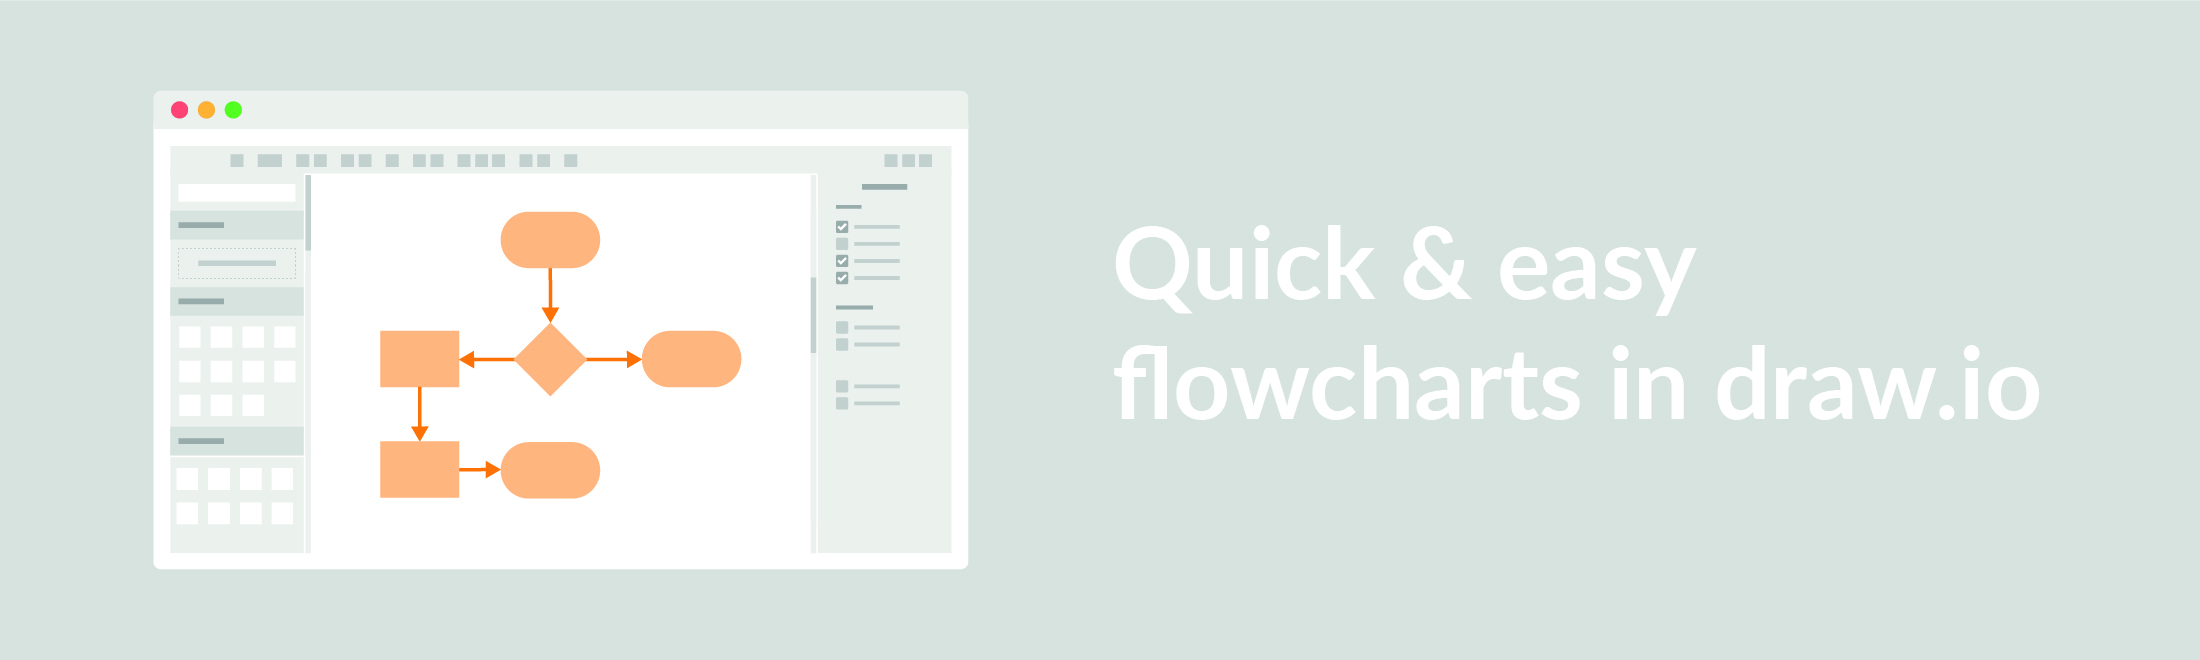 flowcharts in draw.io